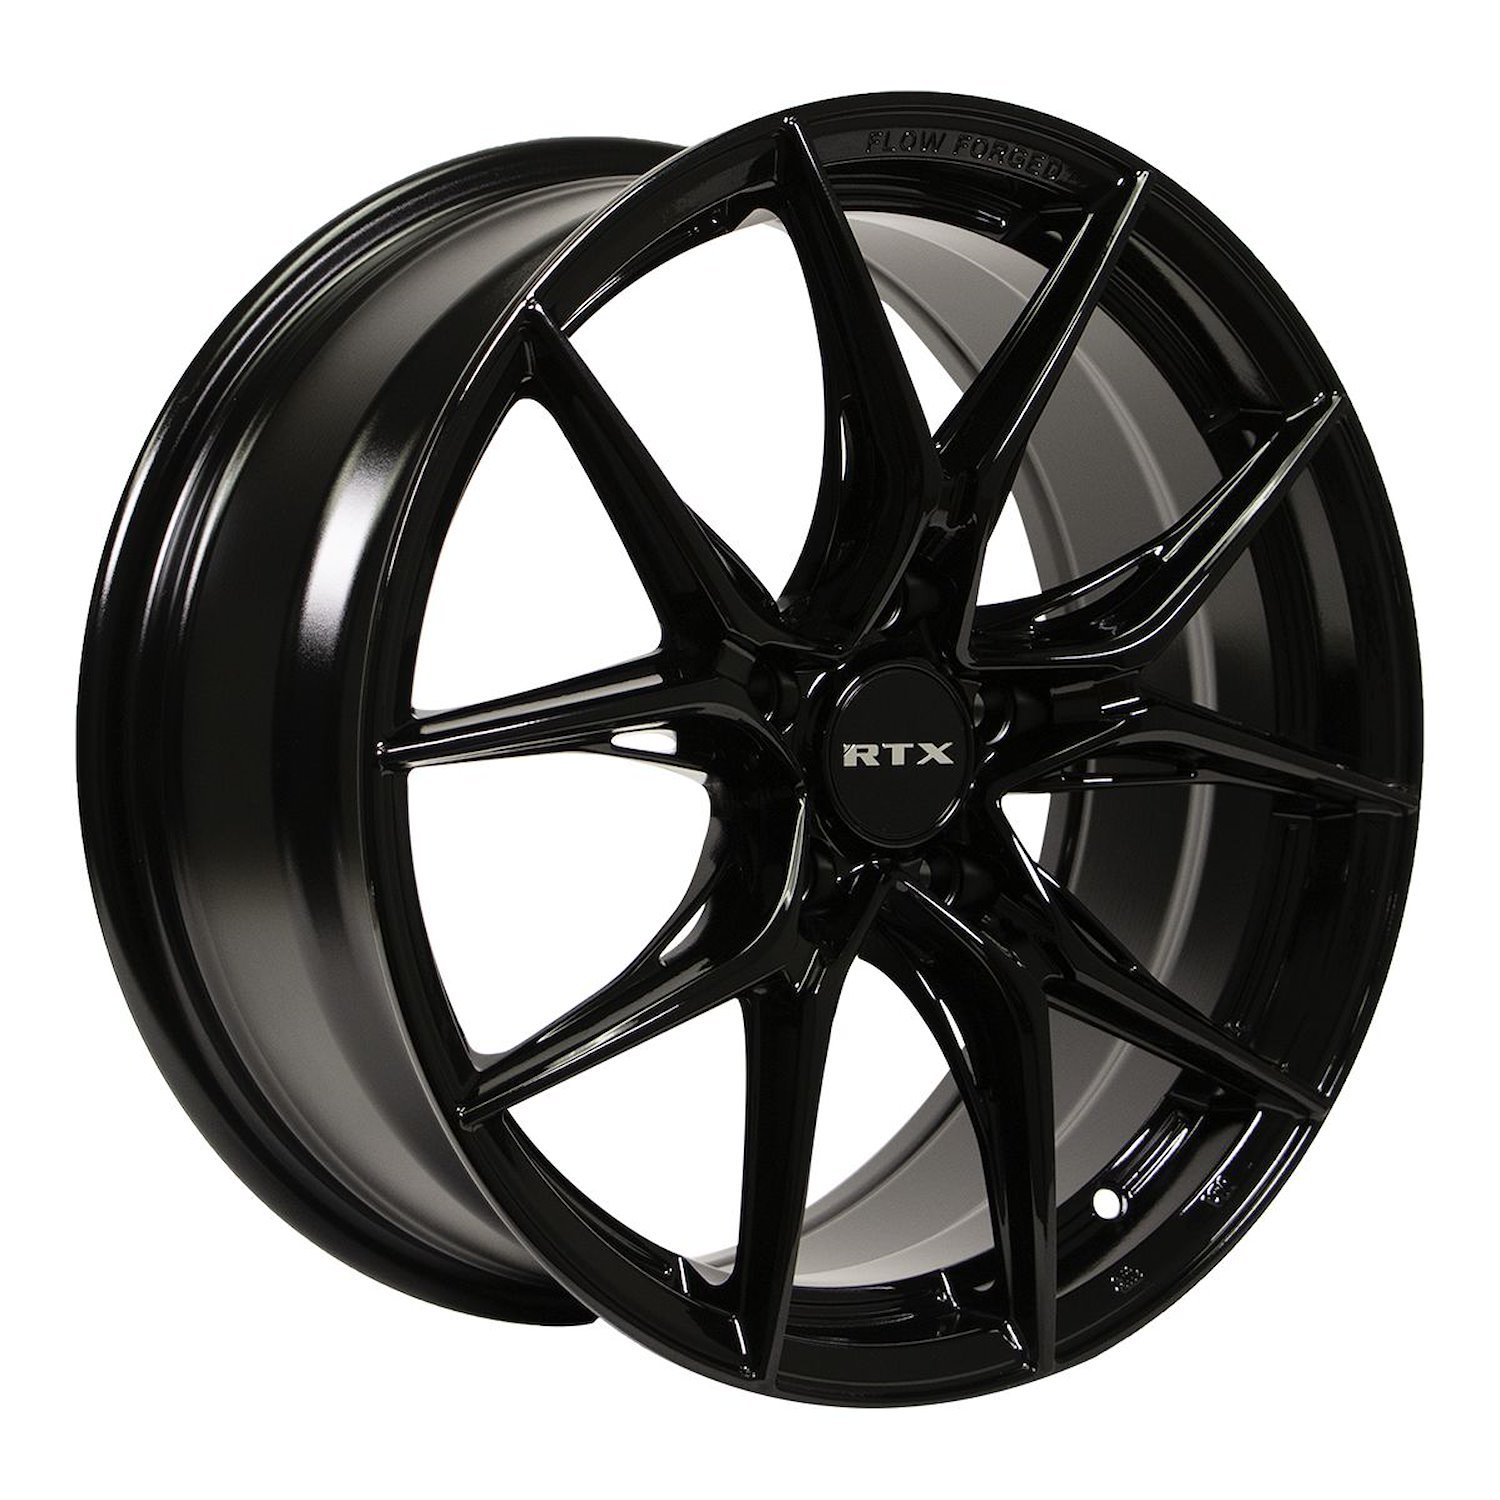 082843 RTX-Series Slick Wheel [Size: 19" x 8.50"] Gloss Black Finish